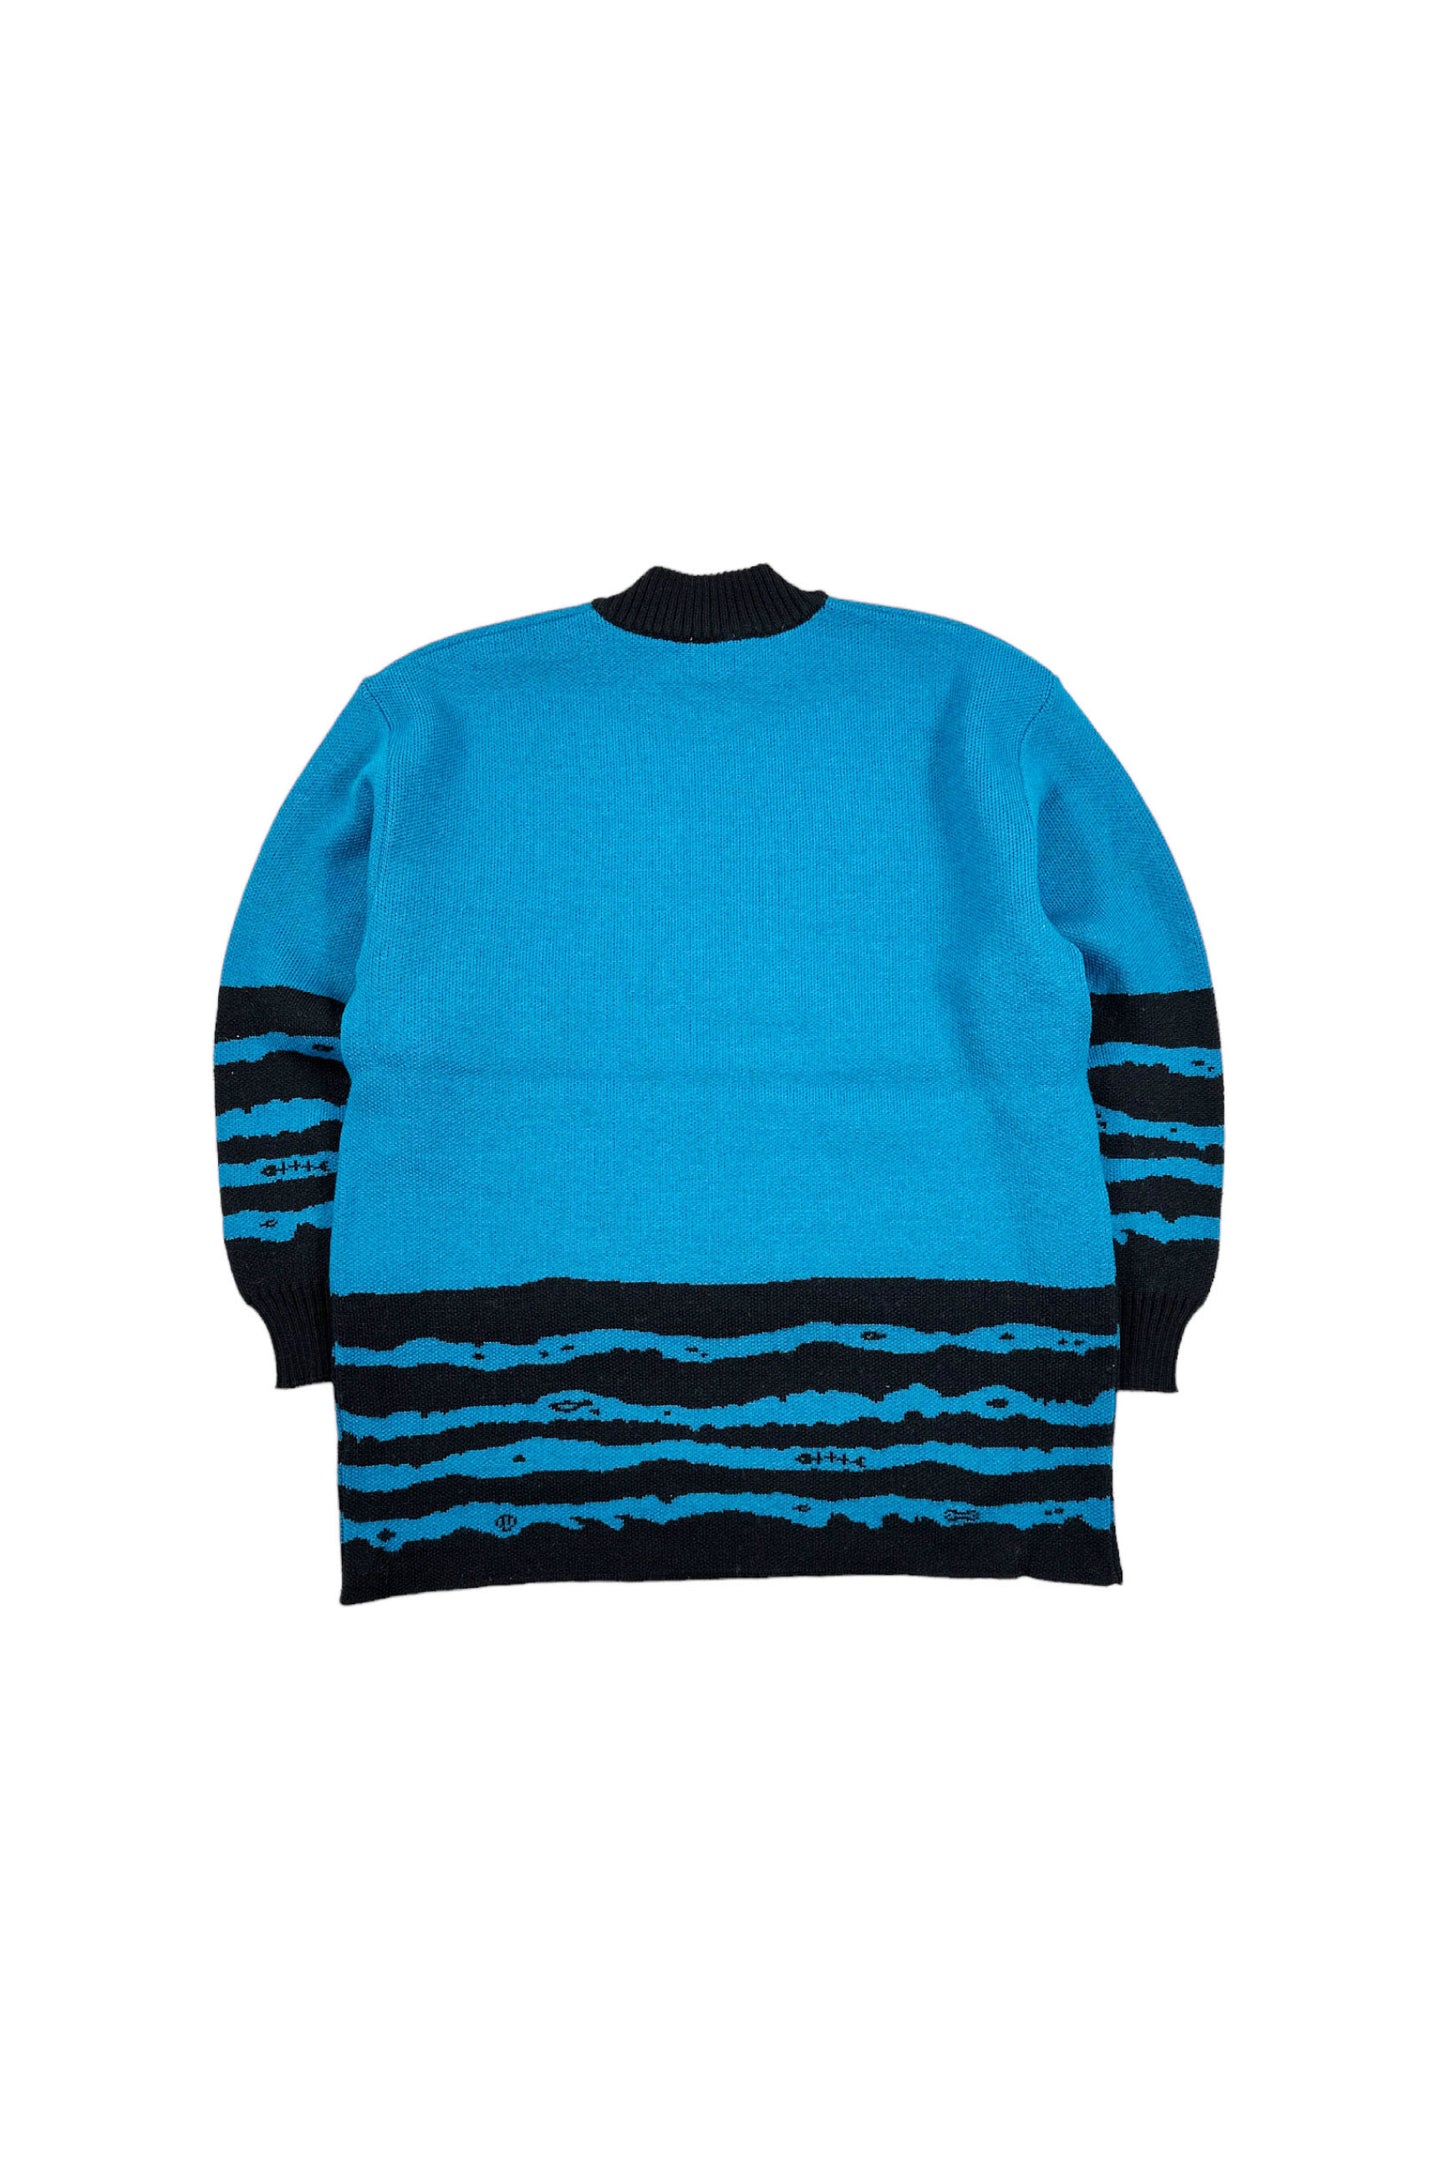 KANSAIMPACT sweater